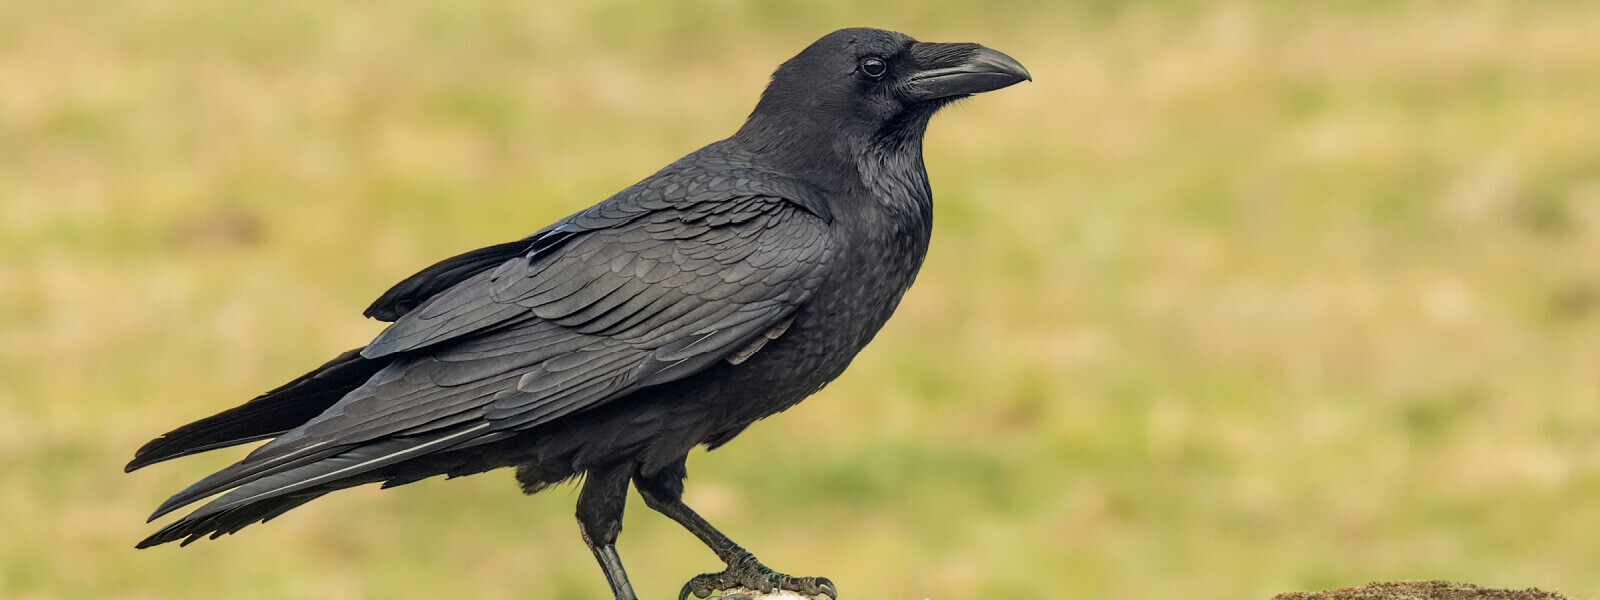 Crow repeller